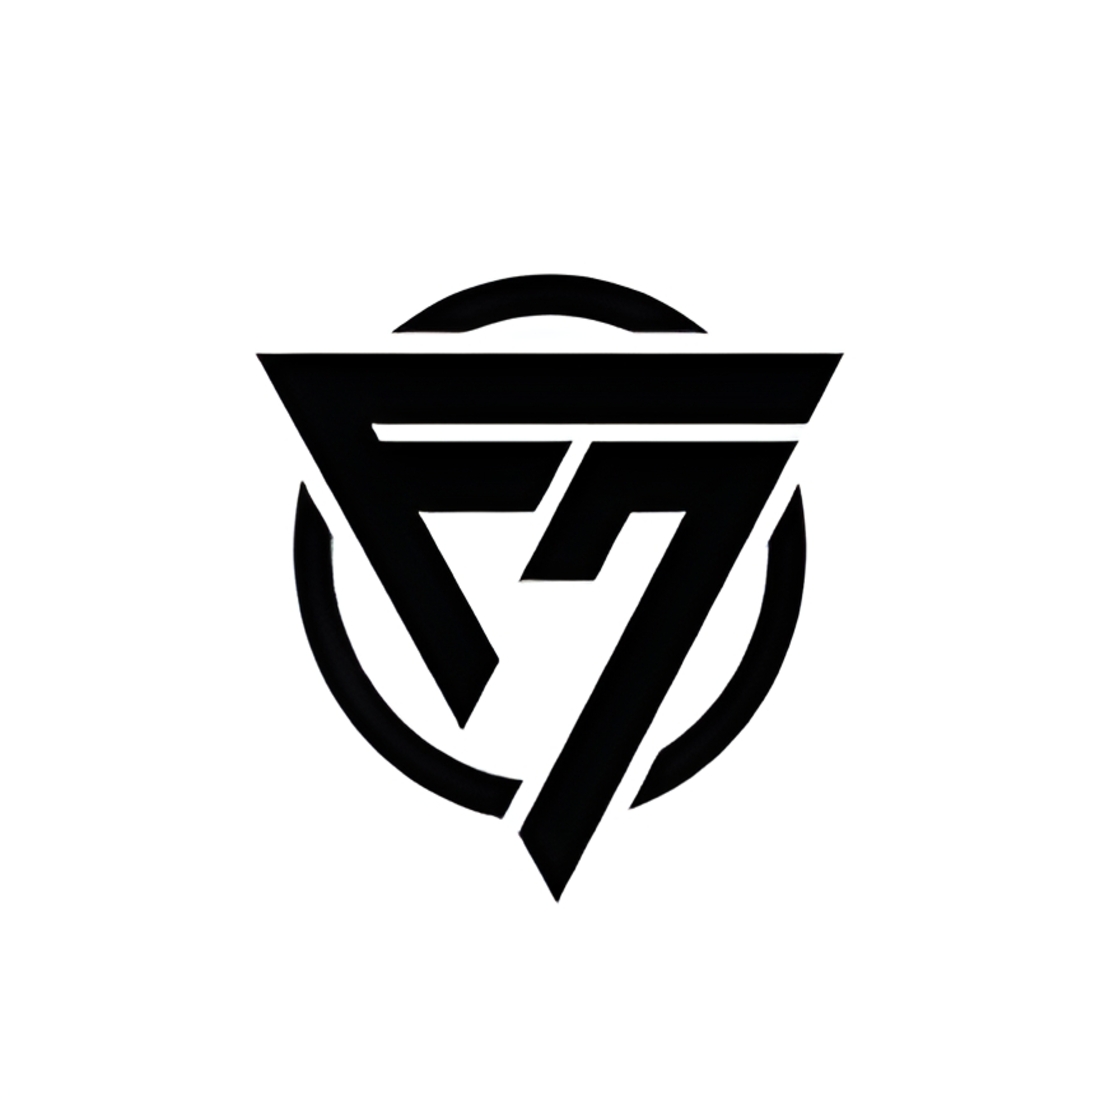 F 7 logo with faiz name preview image.